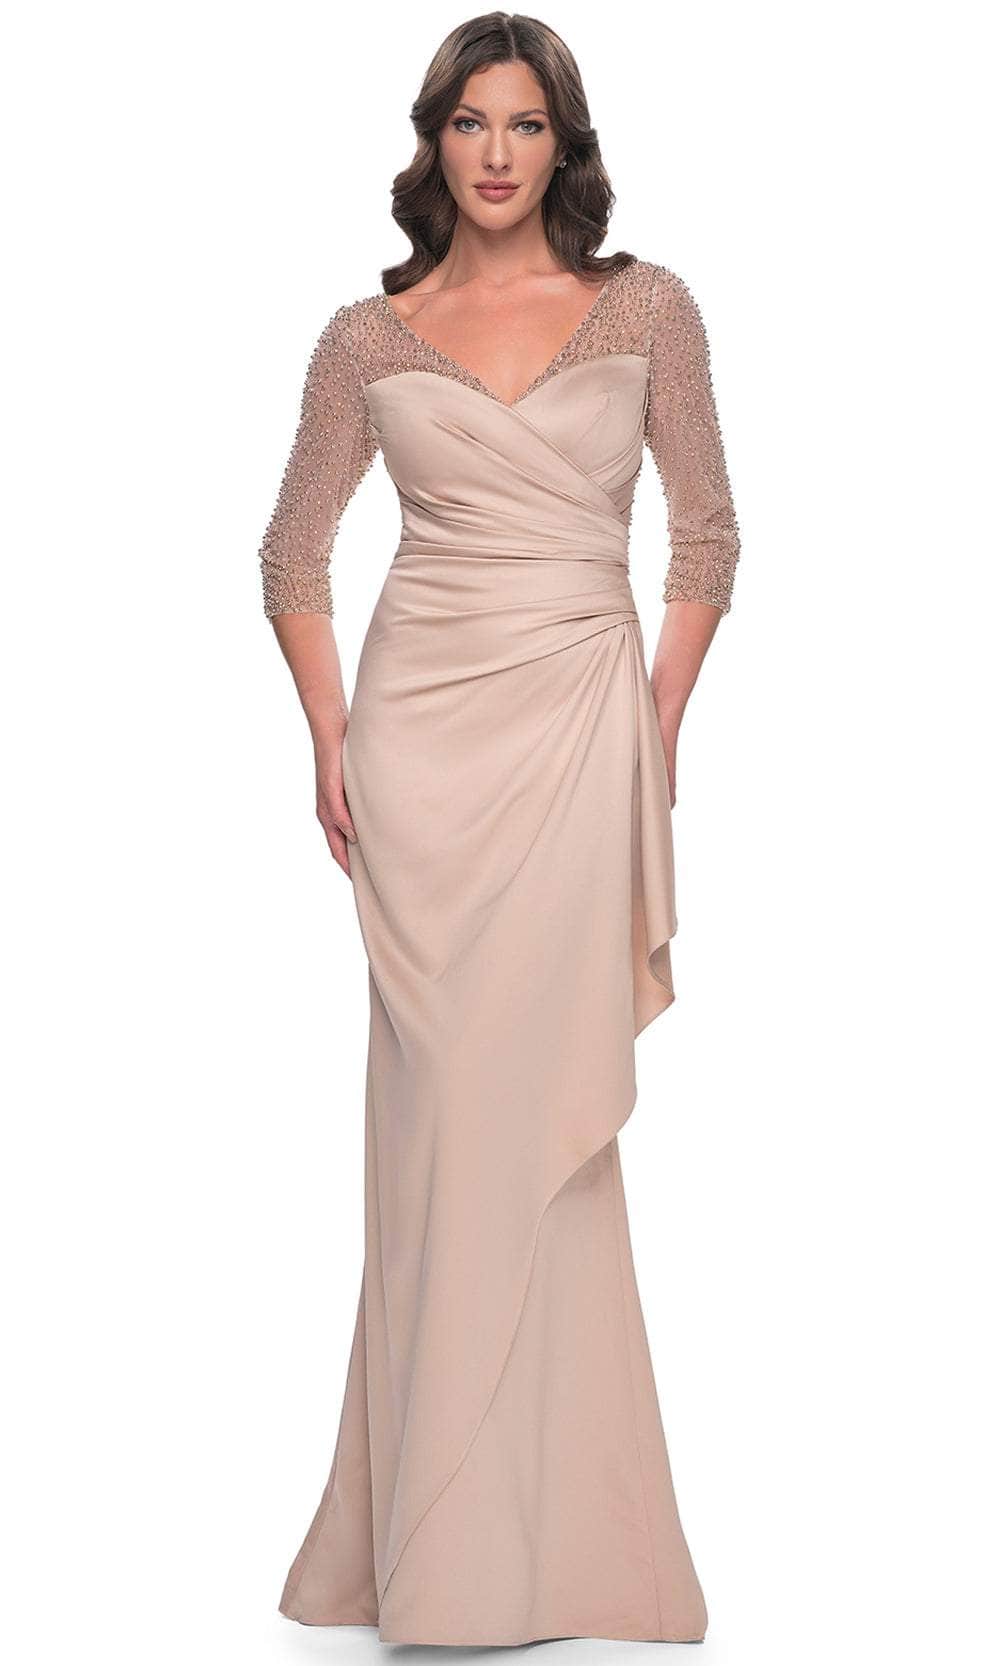 La Femme 31011 - Beaded Illusion Satin Evening Dress Evening Dresses 2 / Champagne